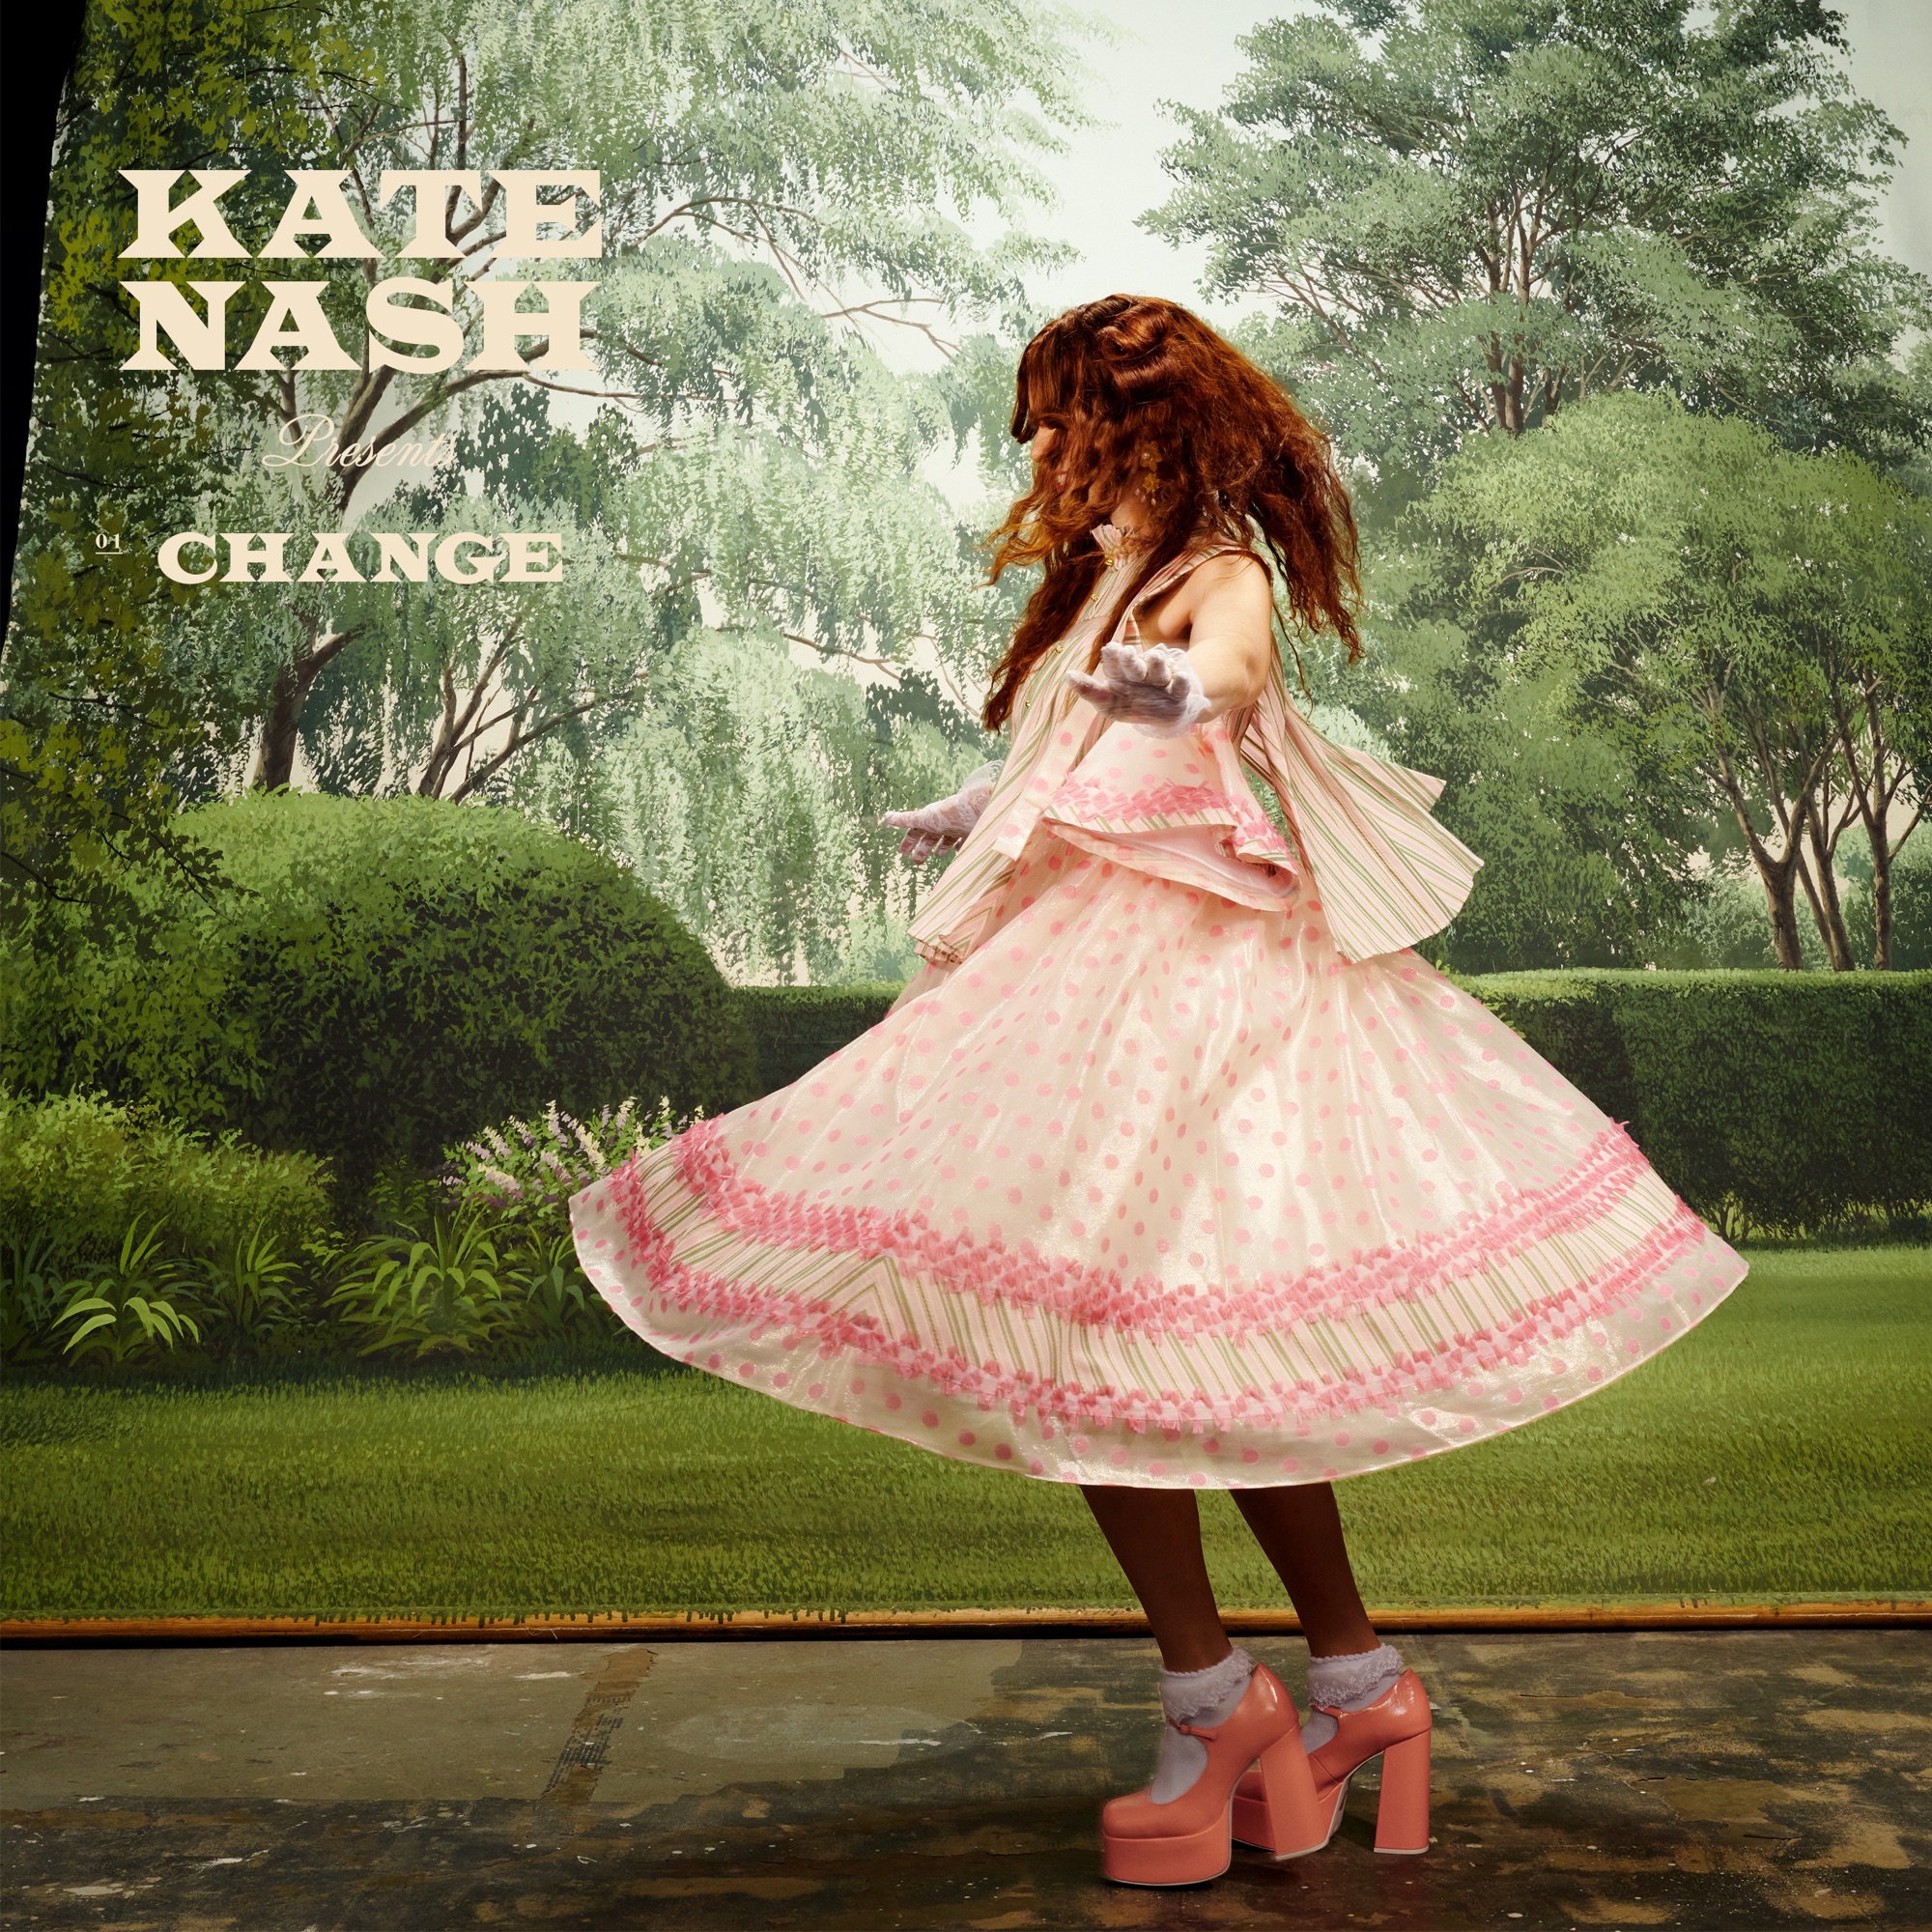 Kate Nash Change cover artwork